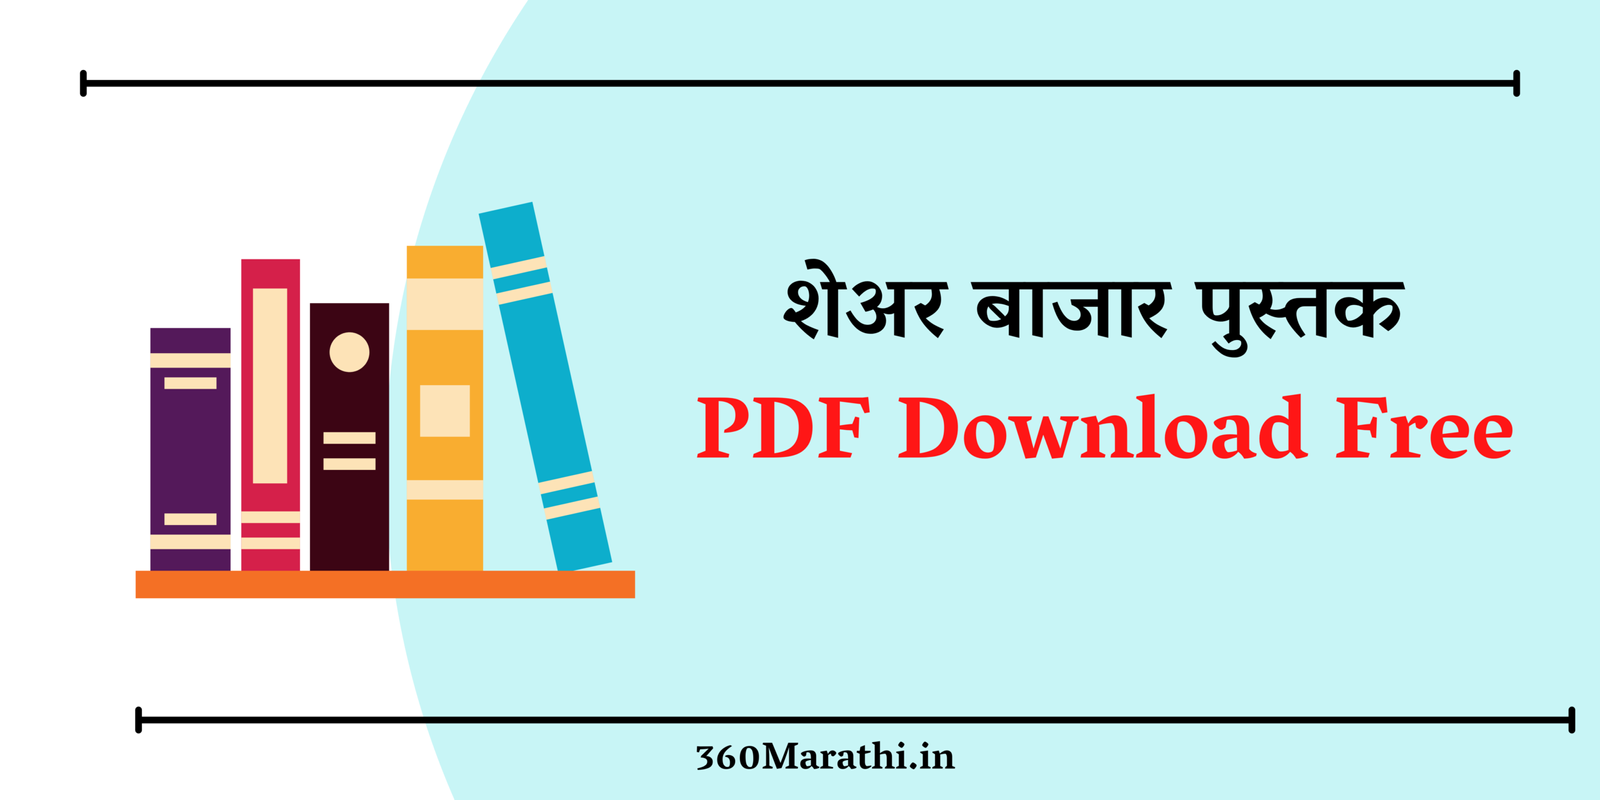 शेअर बाजार पुस्तक PDF Download Free | Share Market Marathi Books PDF Free Download